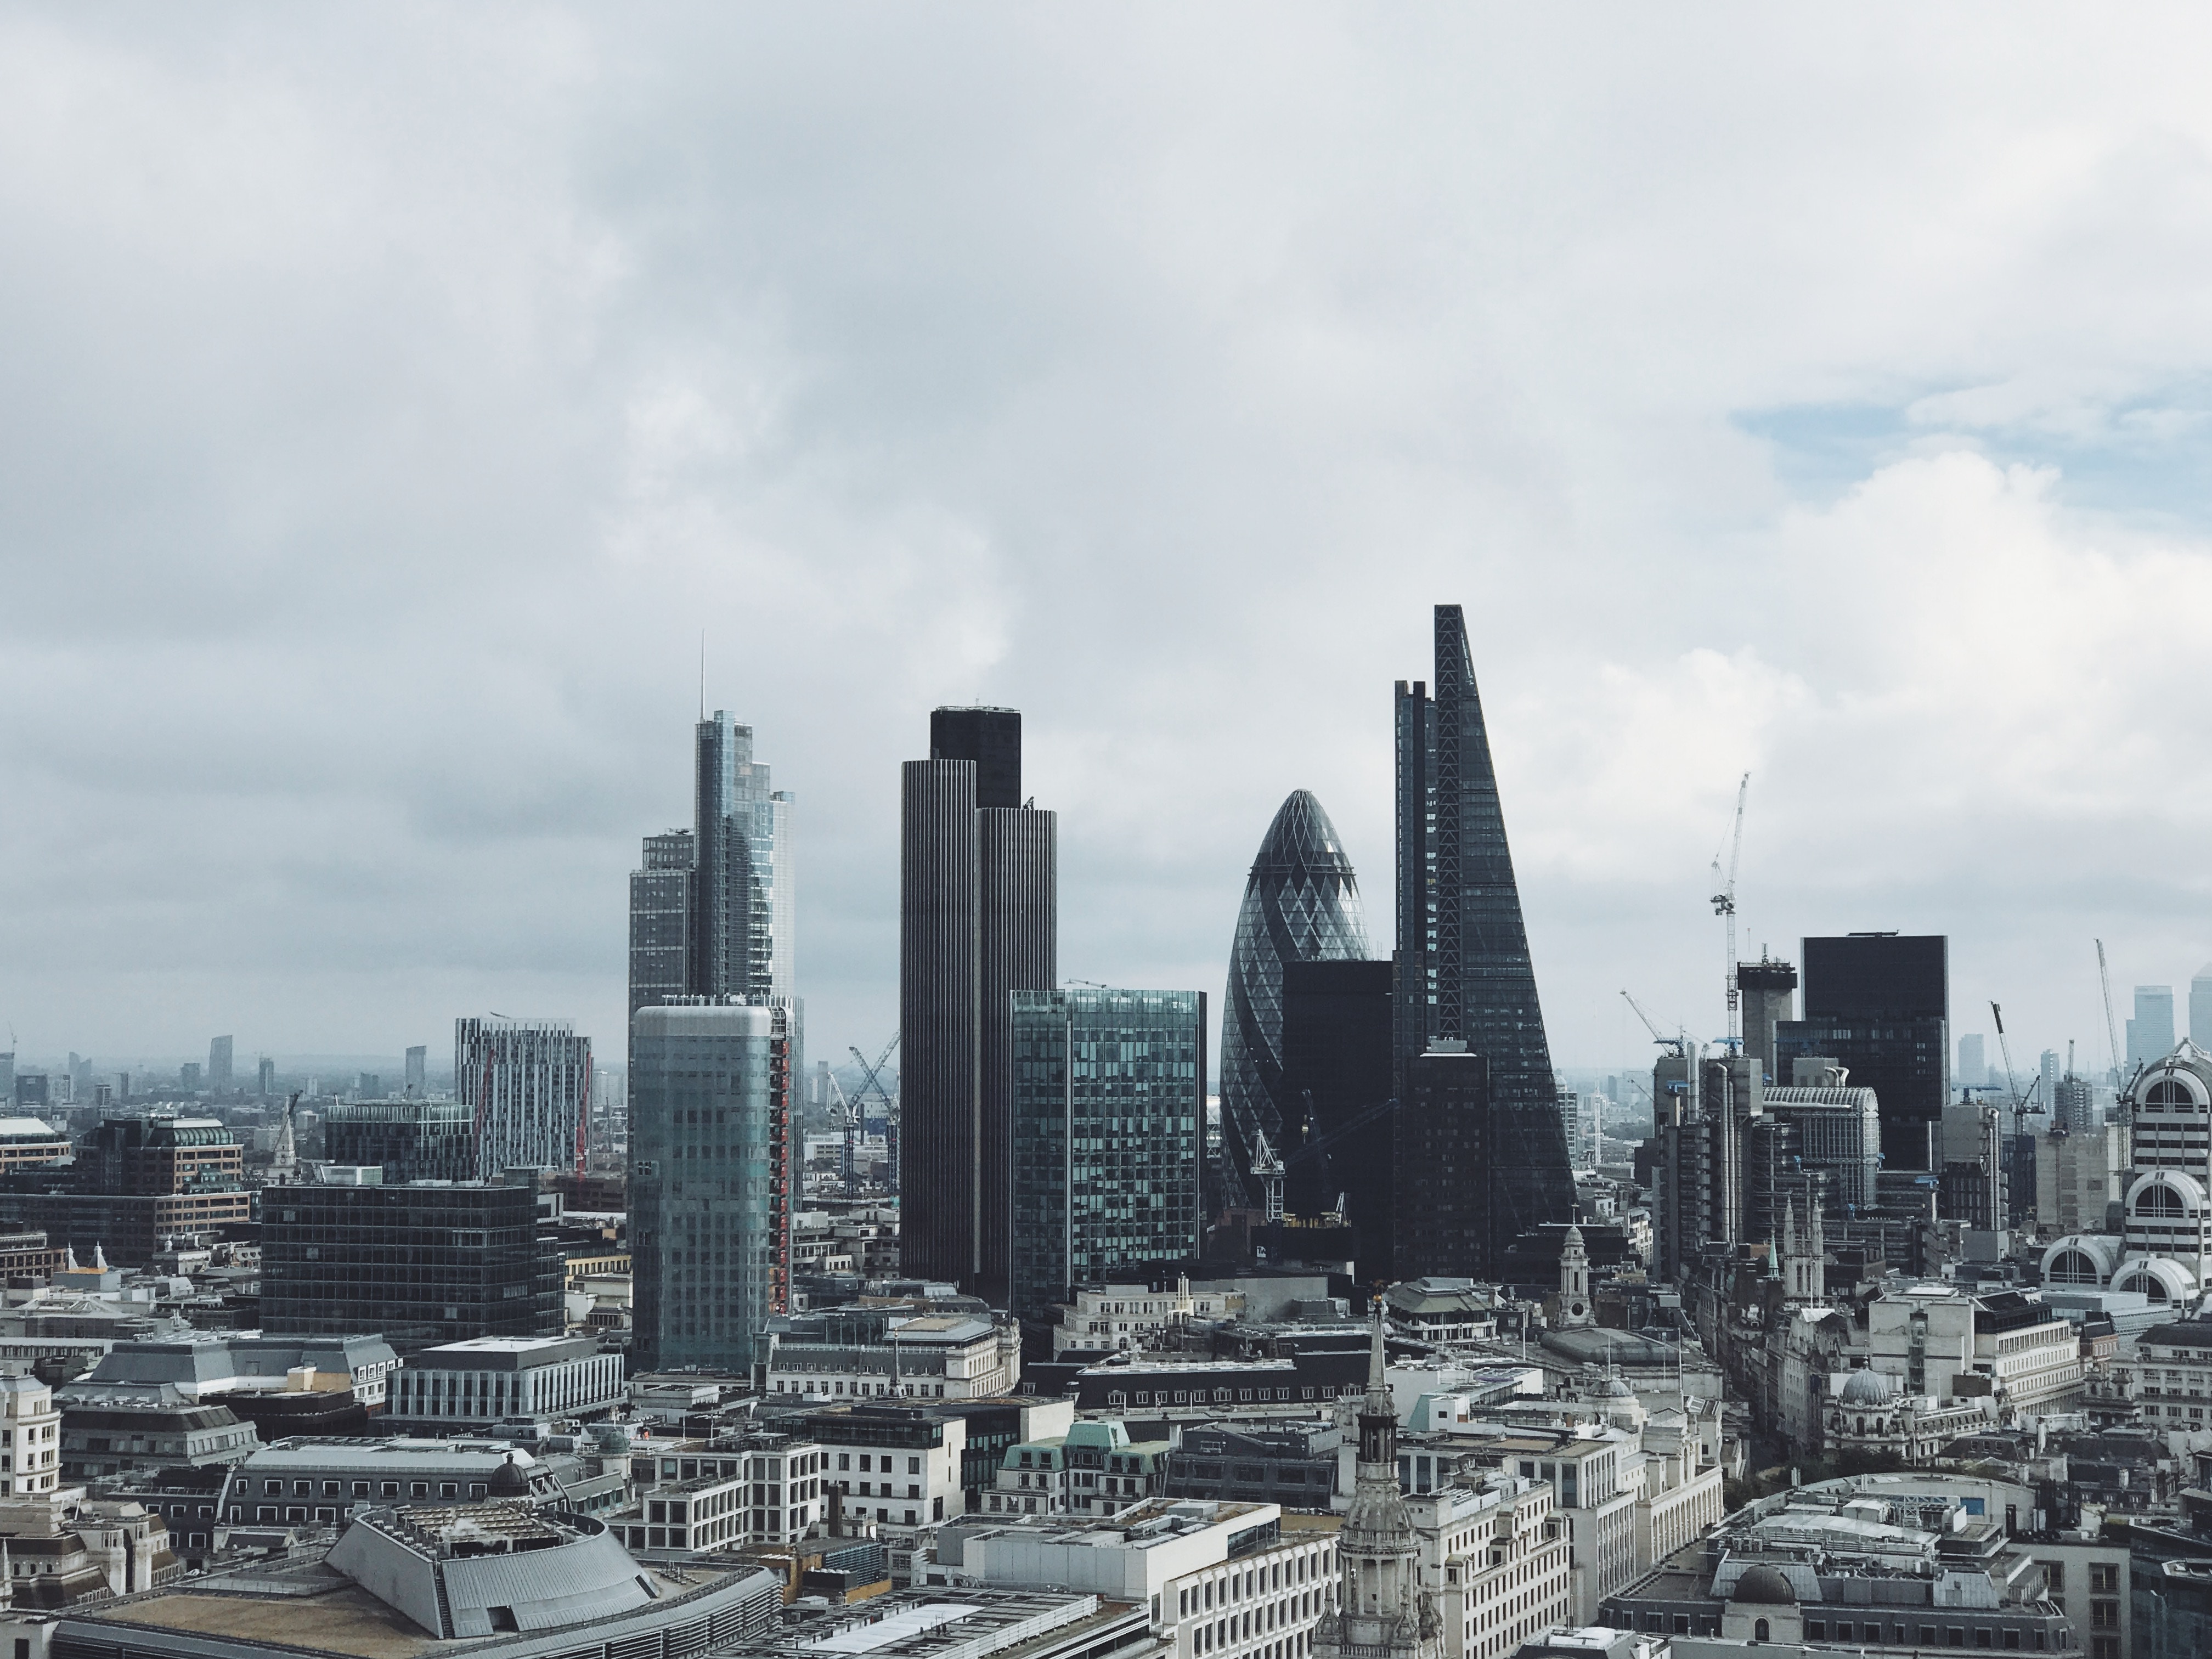  London business district skyline.jpg